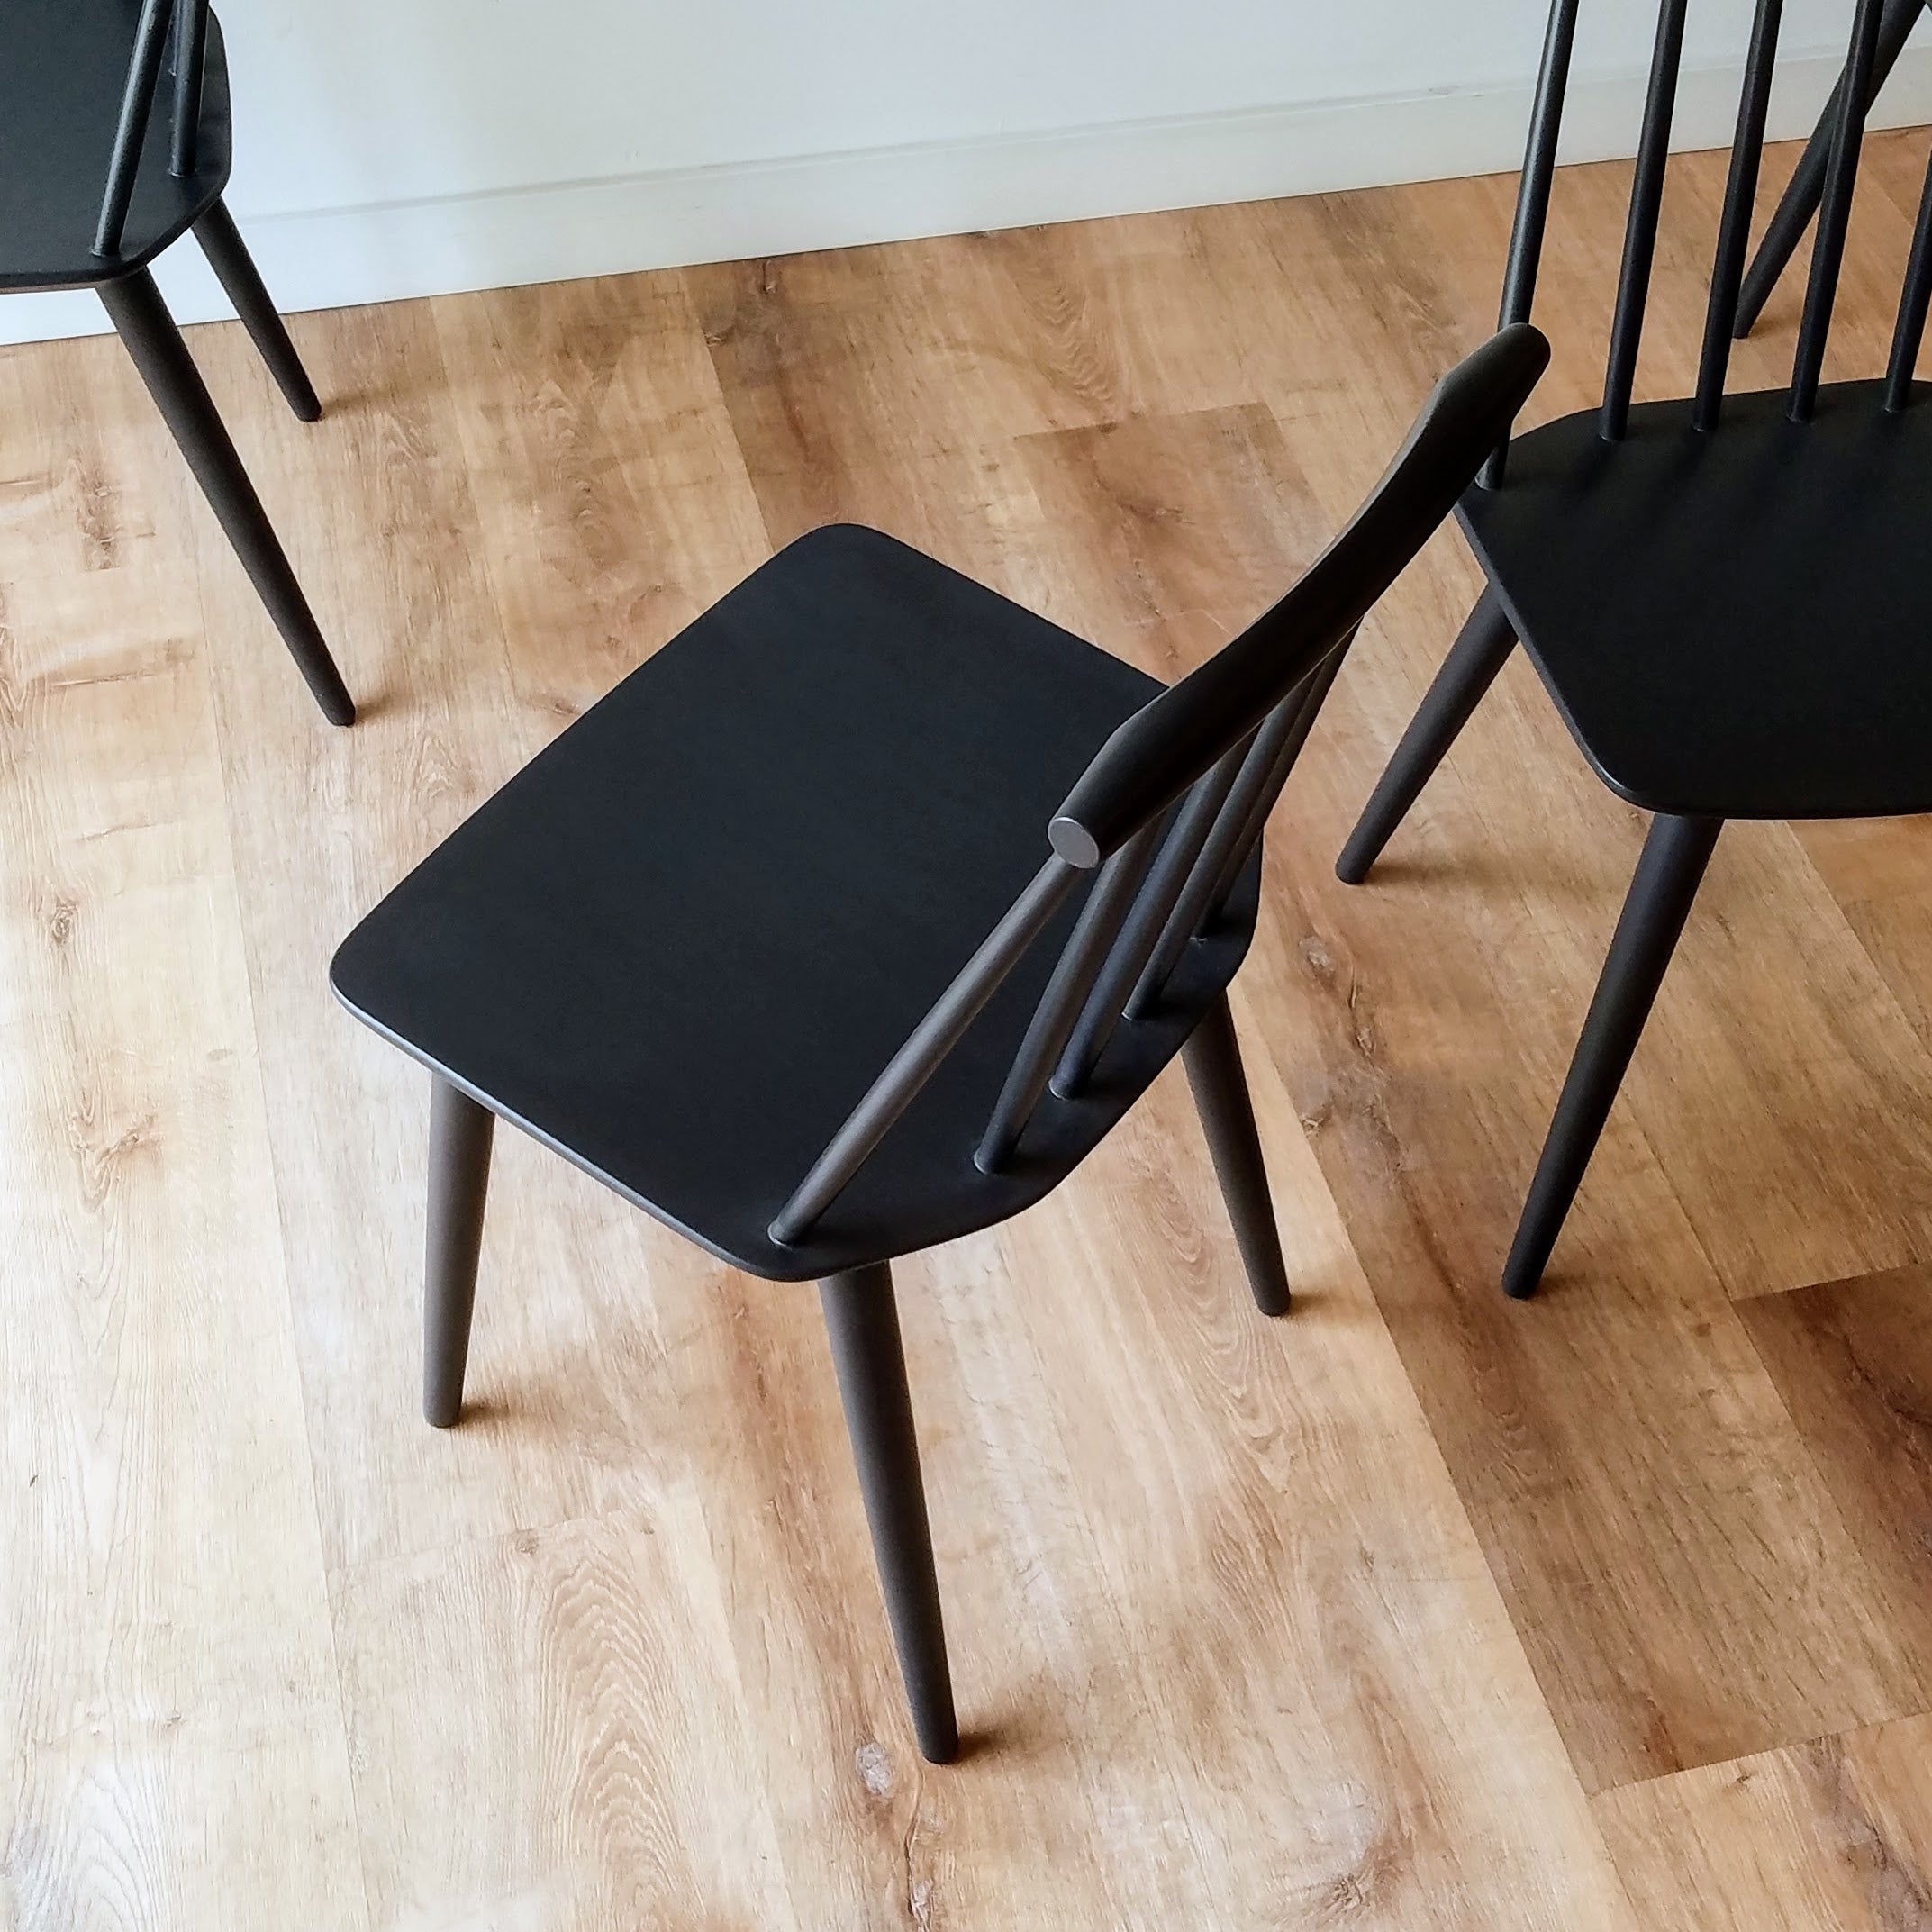 Folke Pålsson Dining Chairs